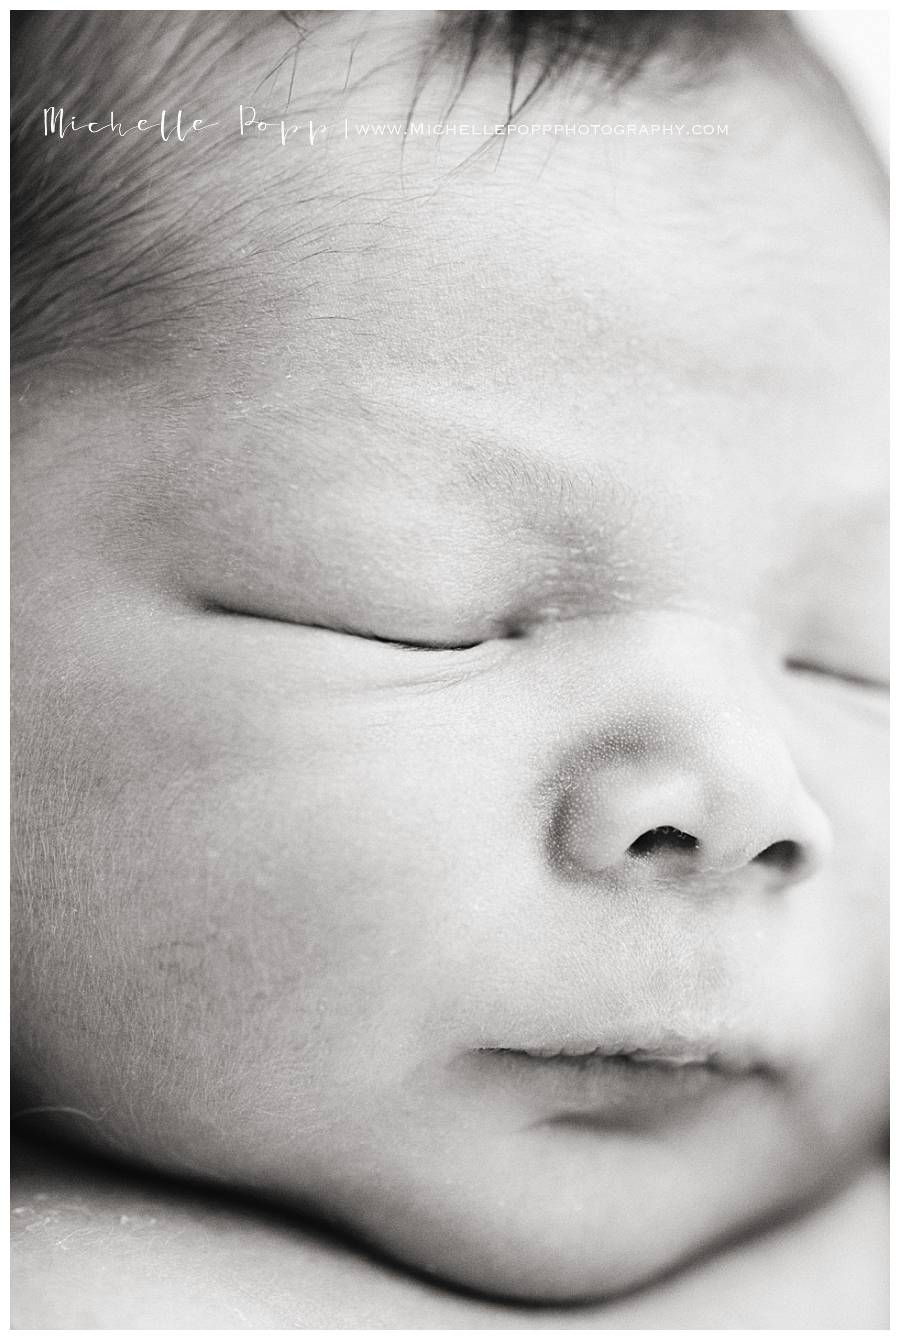 newborn baby eyes closed close up